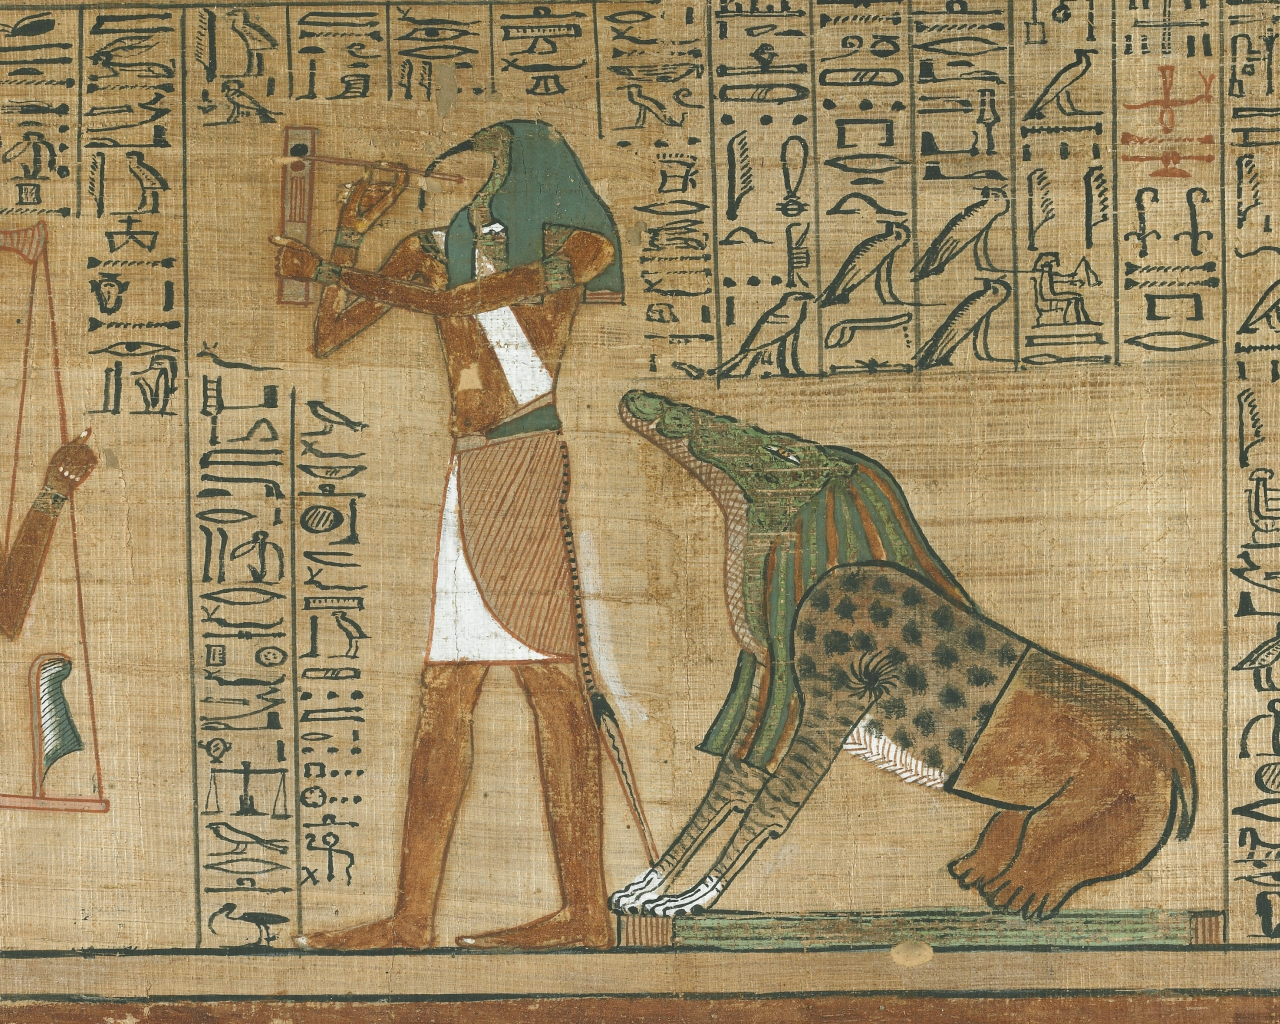 crocodile, tool, blackspot, human form, egyptian symbols, papyrus